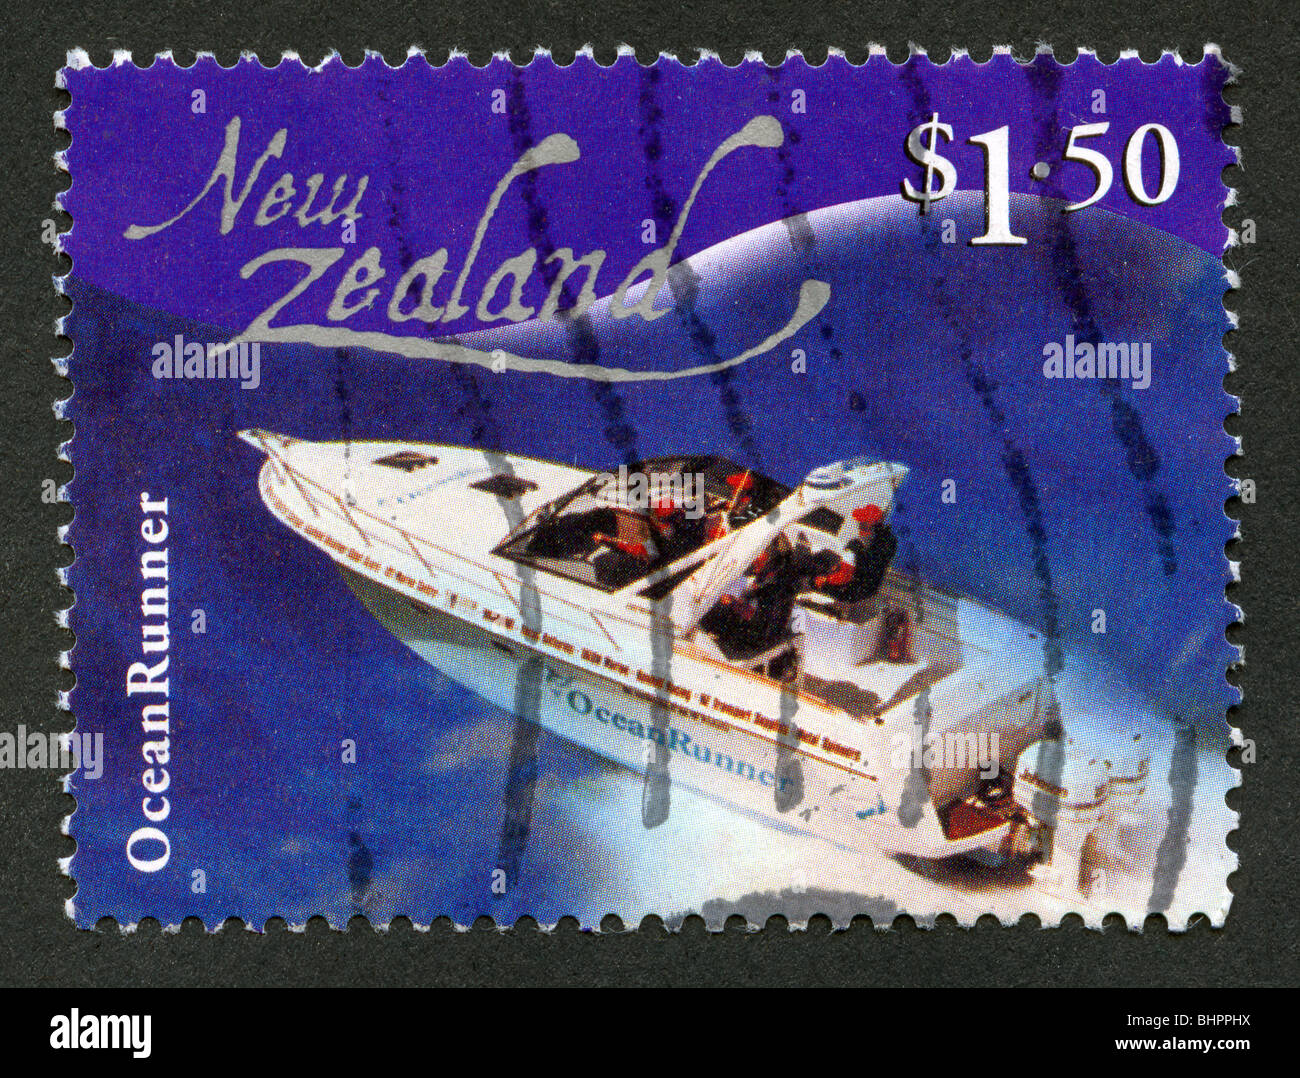 New Zealand postage stamp Stock Photo